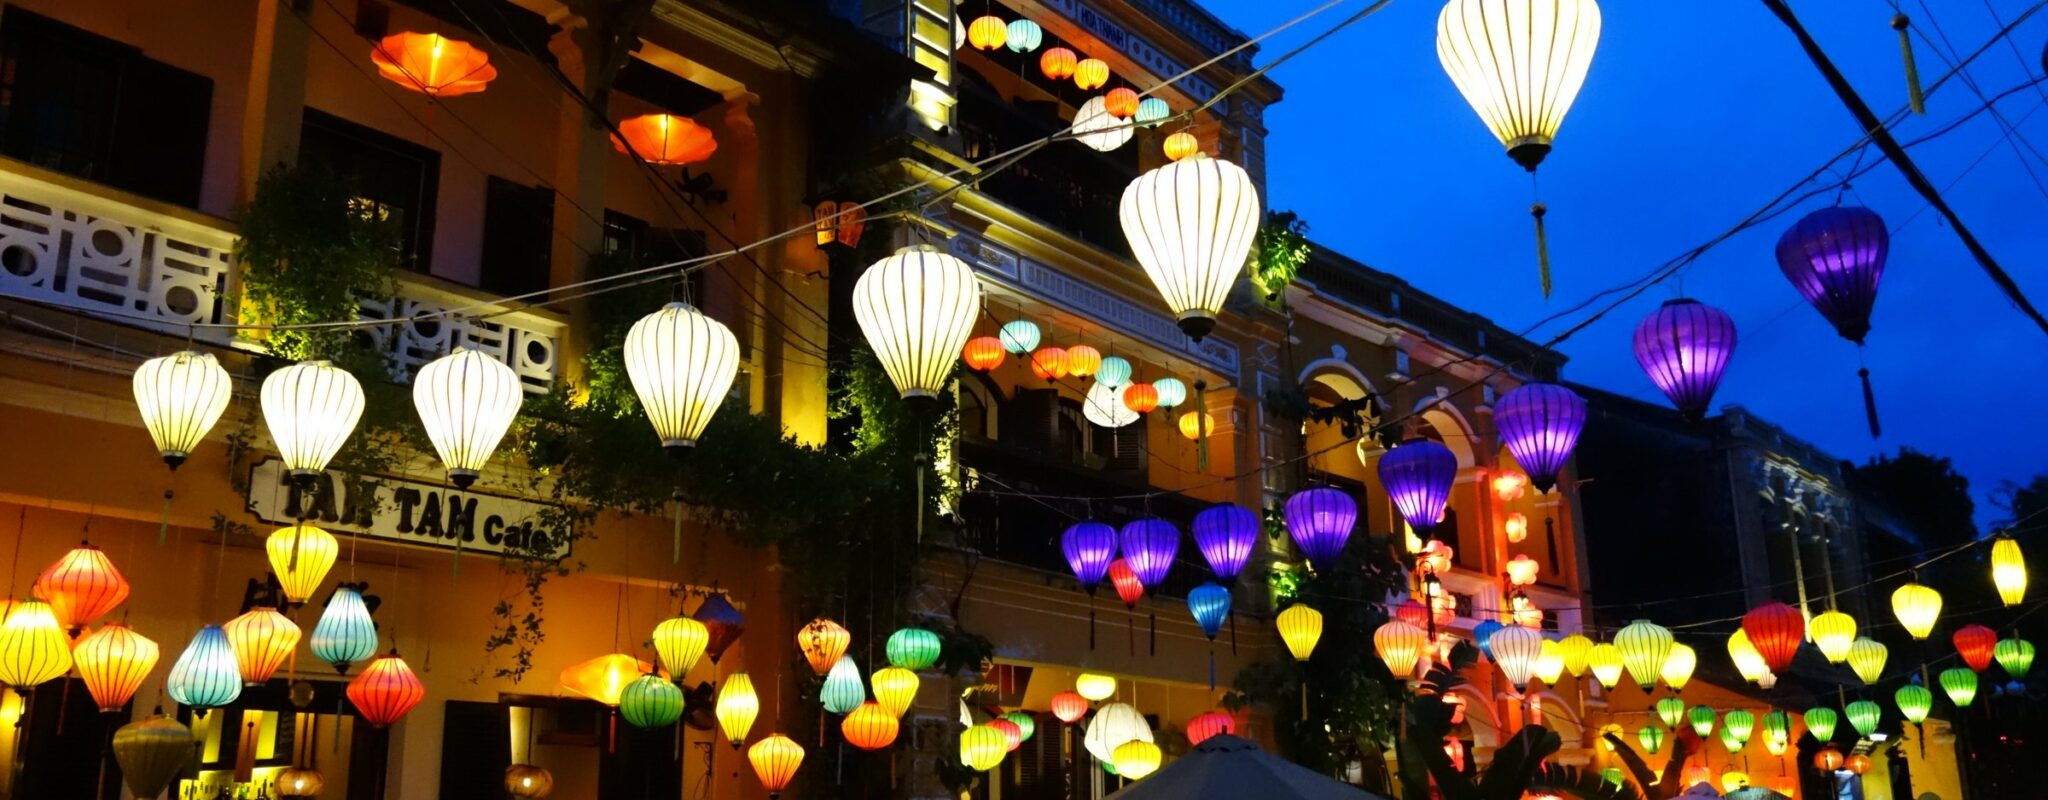 Hoi An Lantern Festival: 2019 dates | InsideAsia Blog